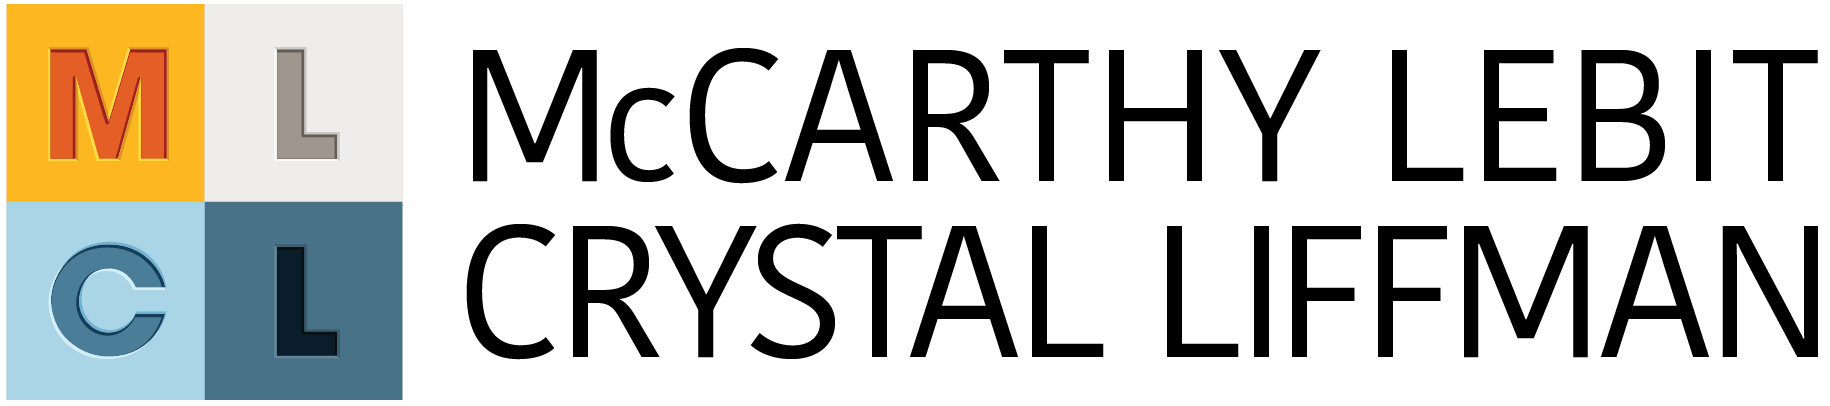 McCarthy, Lebit, Crystal & Liffman Co., LPA Company Logo